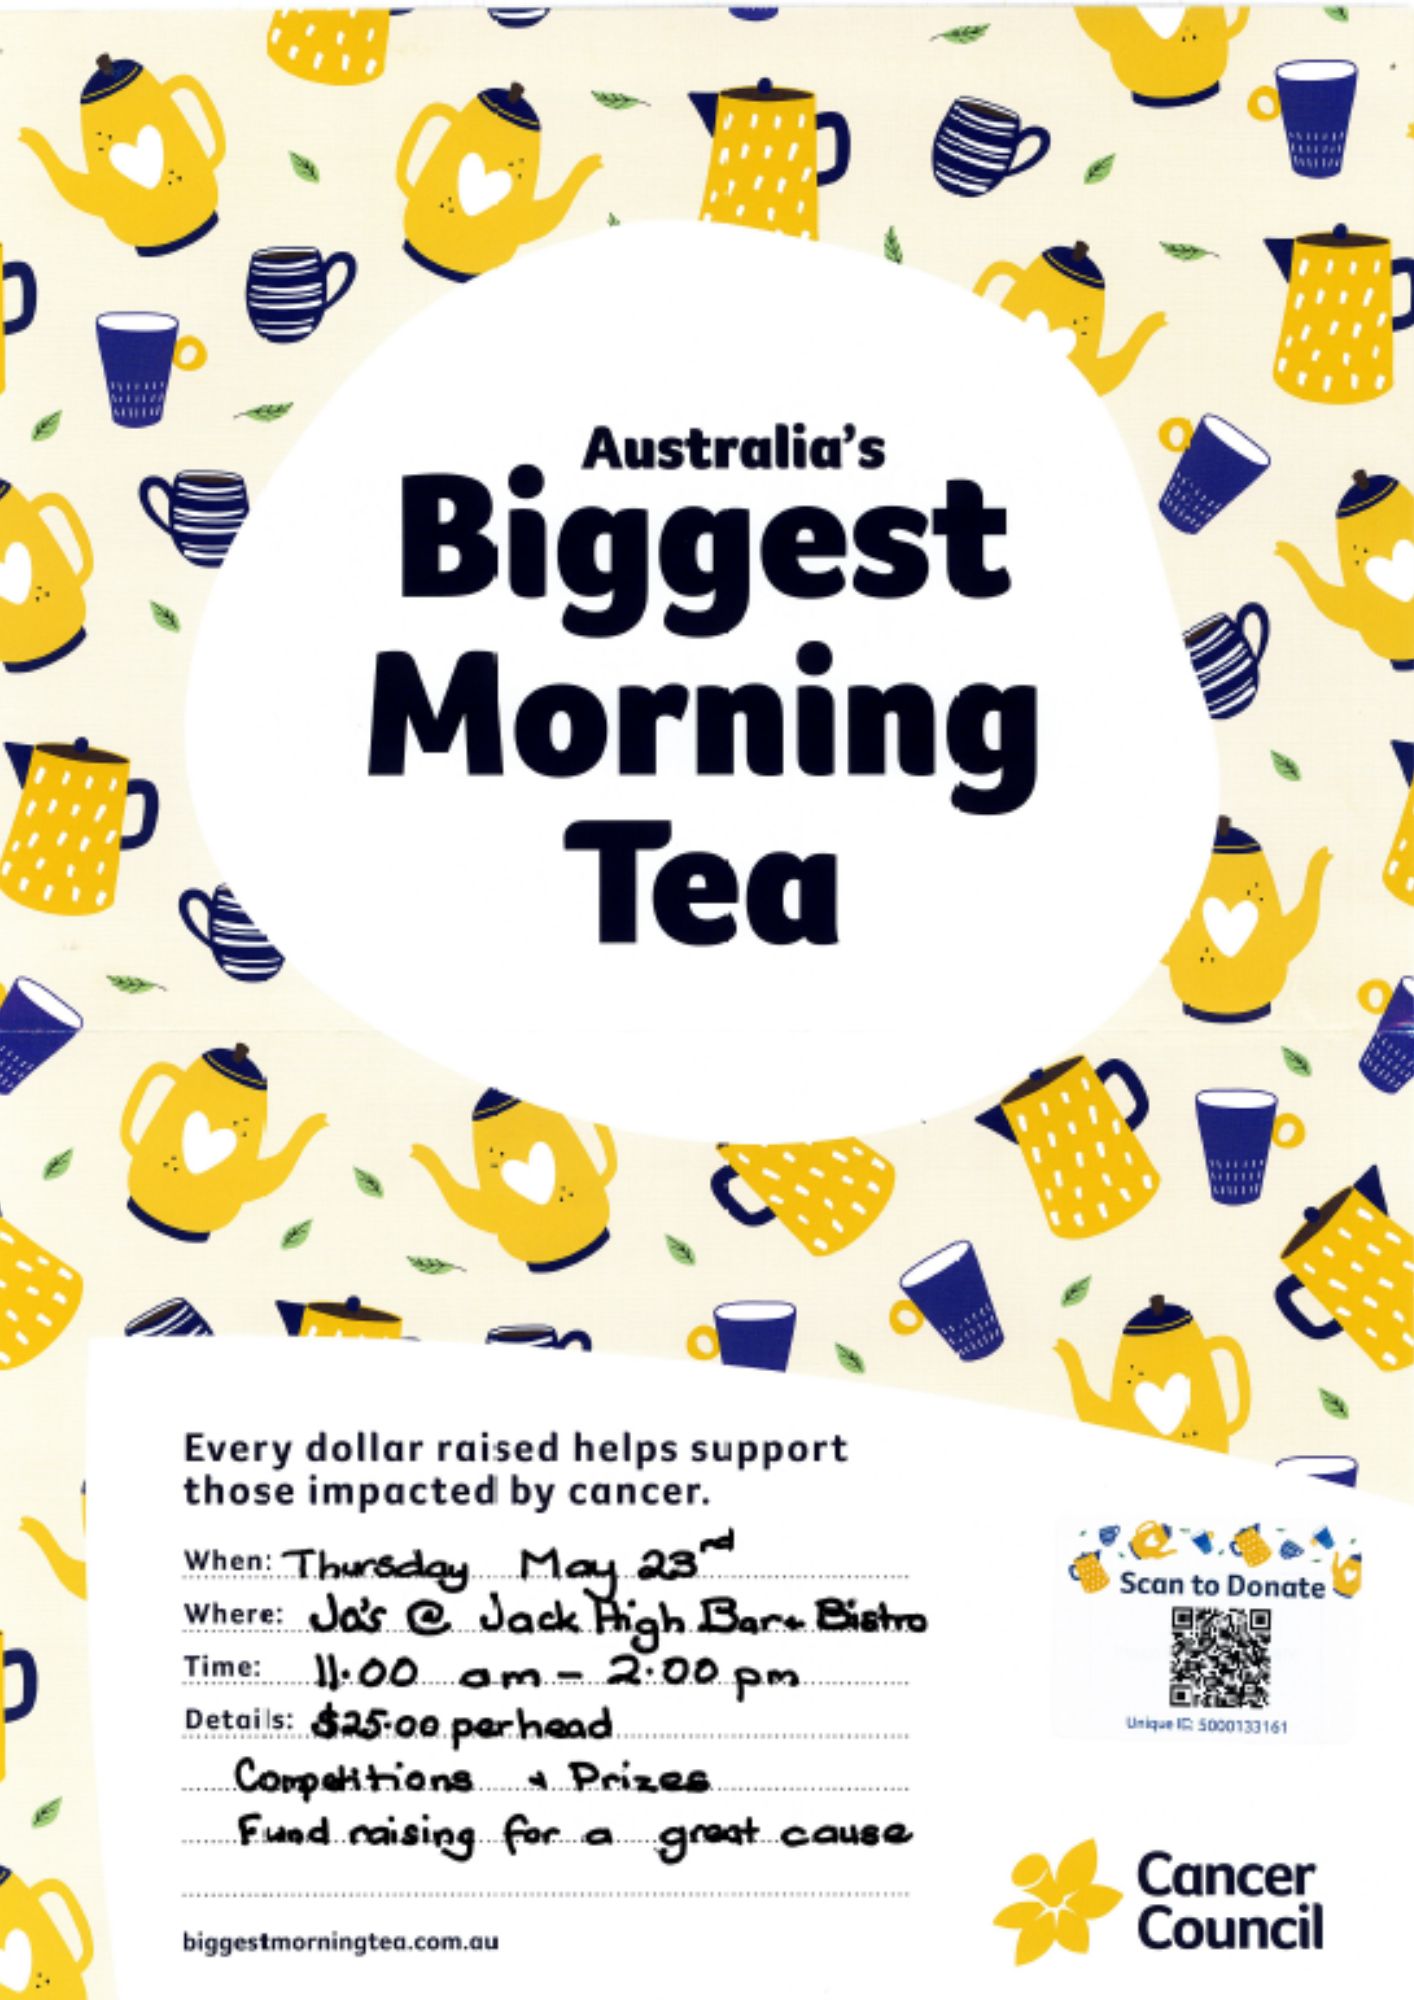 BIGGEST MORNING TEA ad image